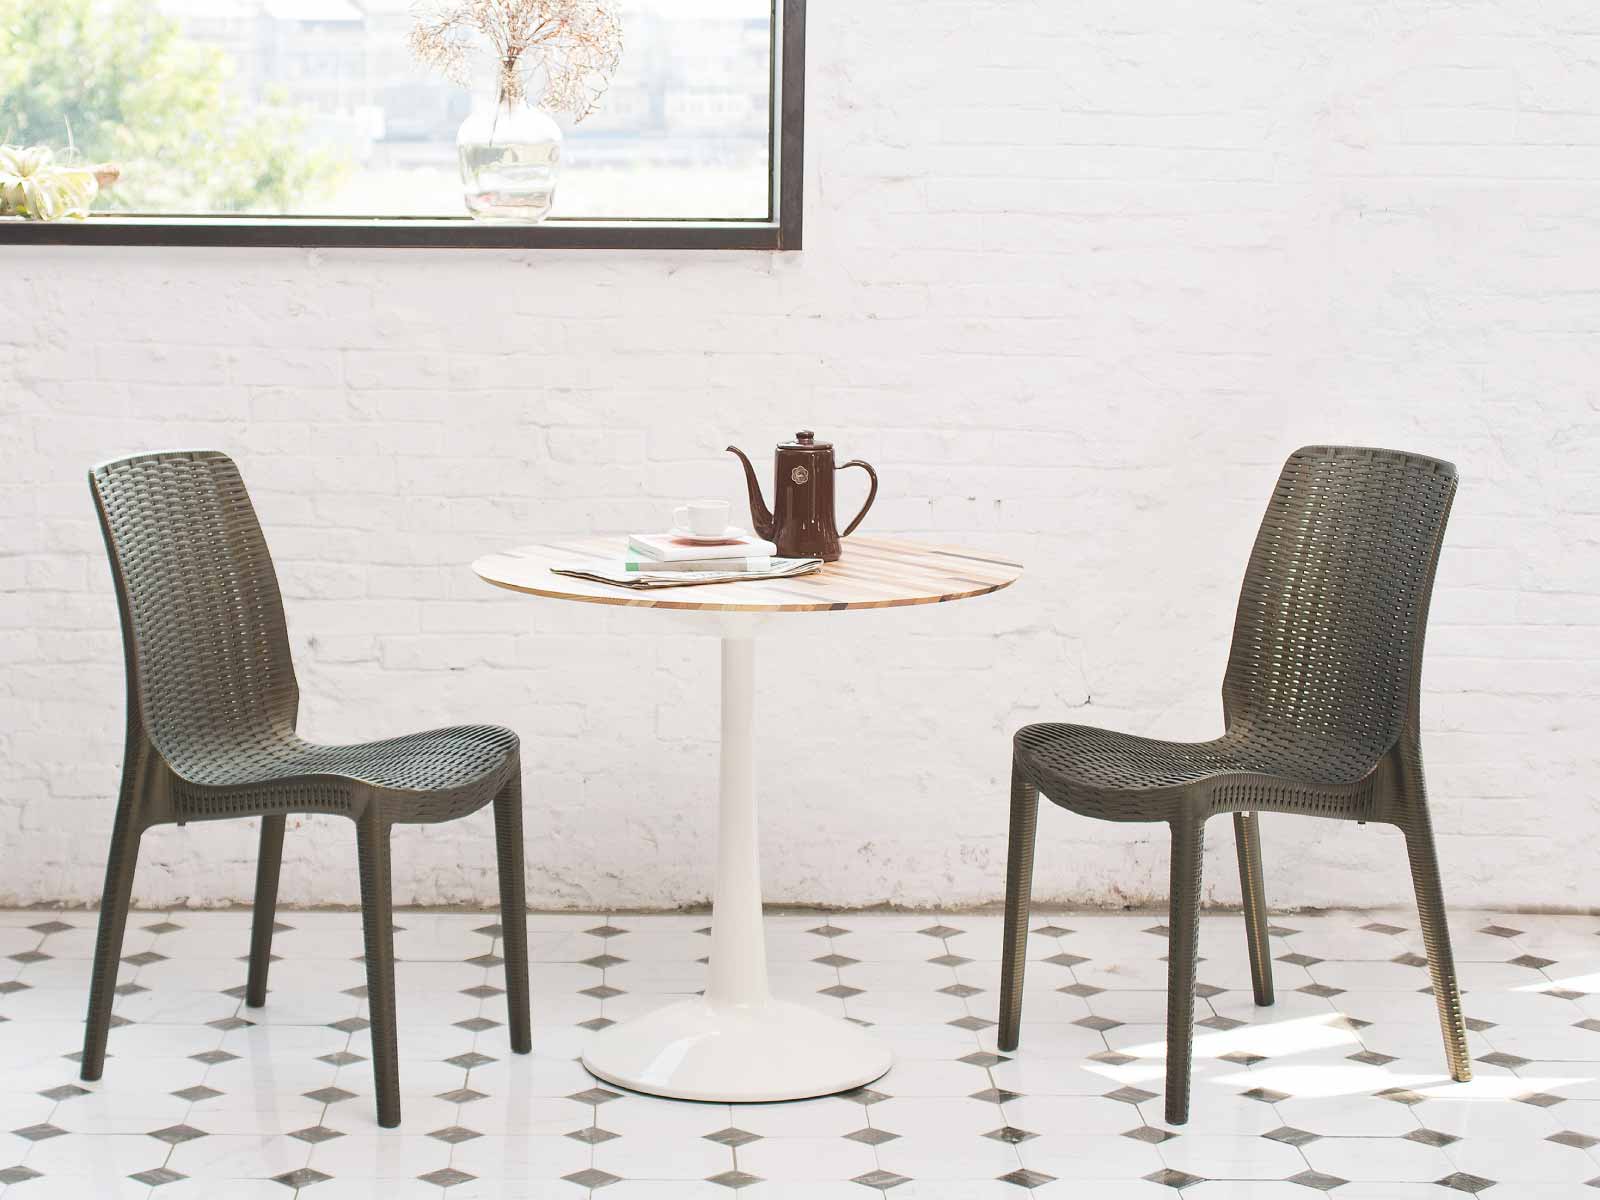 7025-PT3 Rue 藤紋餐椅 -- Lagoon 創意家具&生活家電 戶外家具的專家，顏色繽紛富設計感 室內/戶外都適合使用。